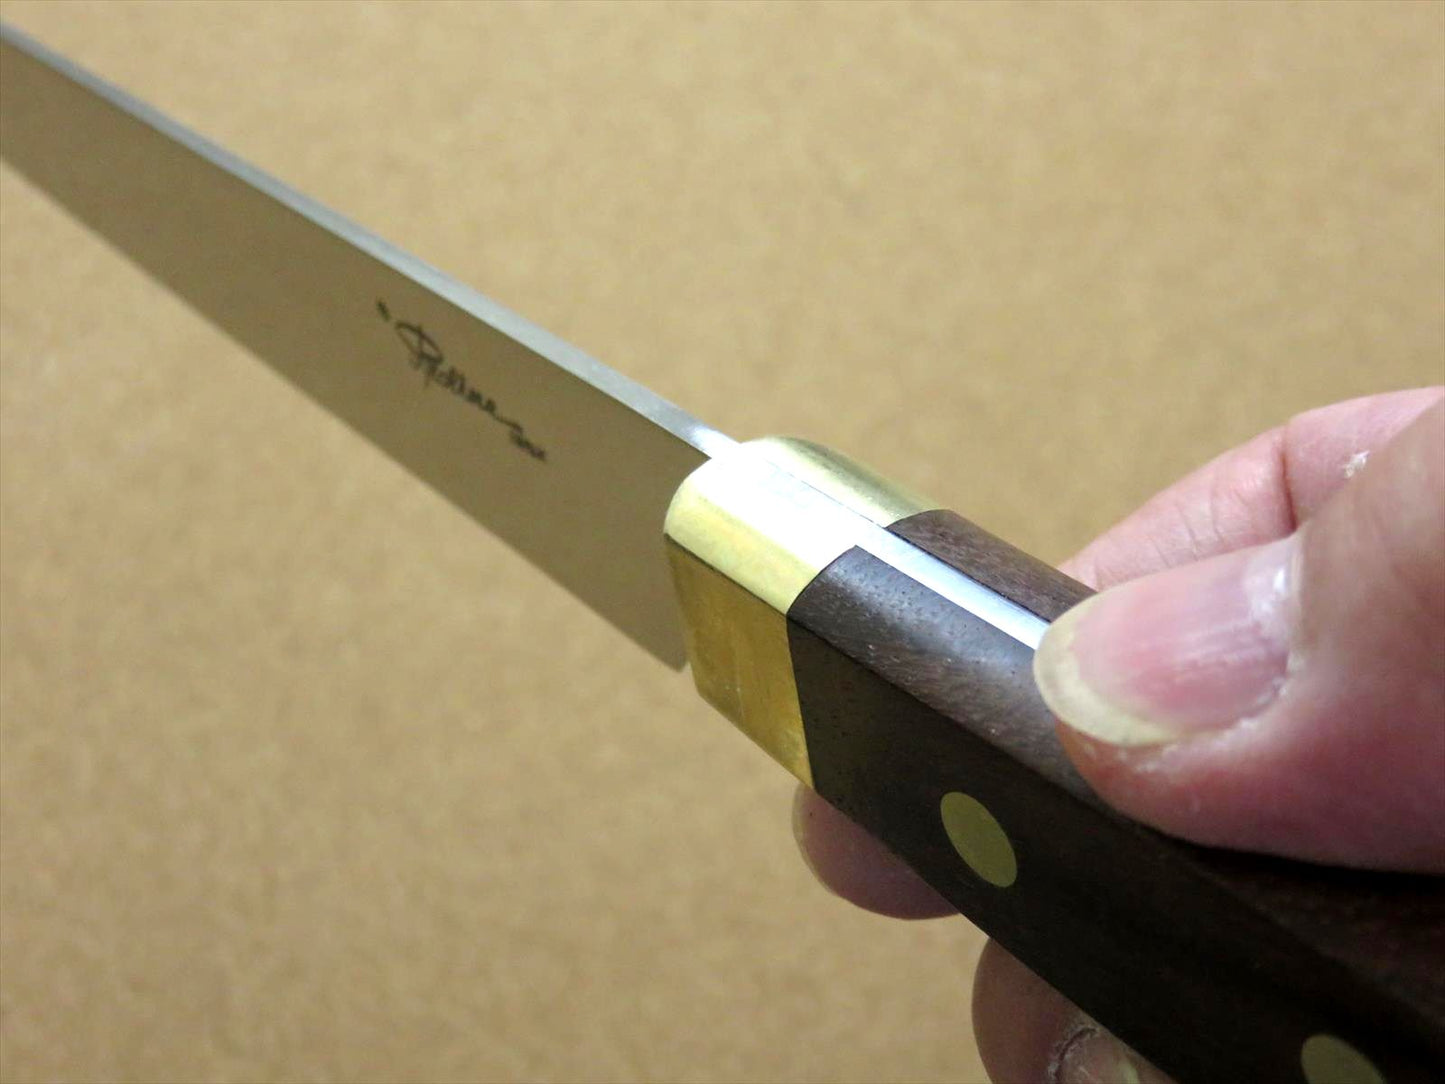 Japanese Kitchen Slicing Knife 230mm 9 inch Cutting meat fish ham SEKI JAPAN